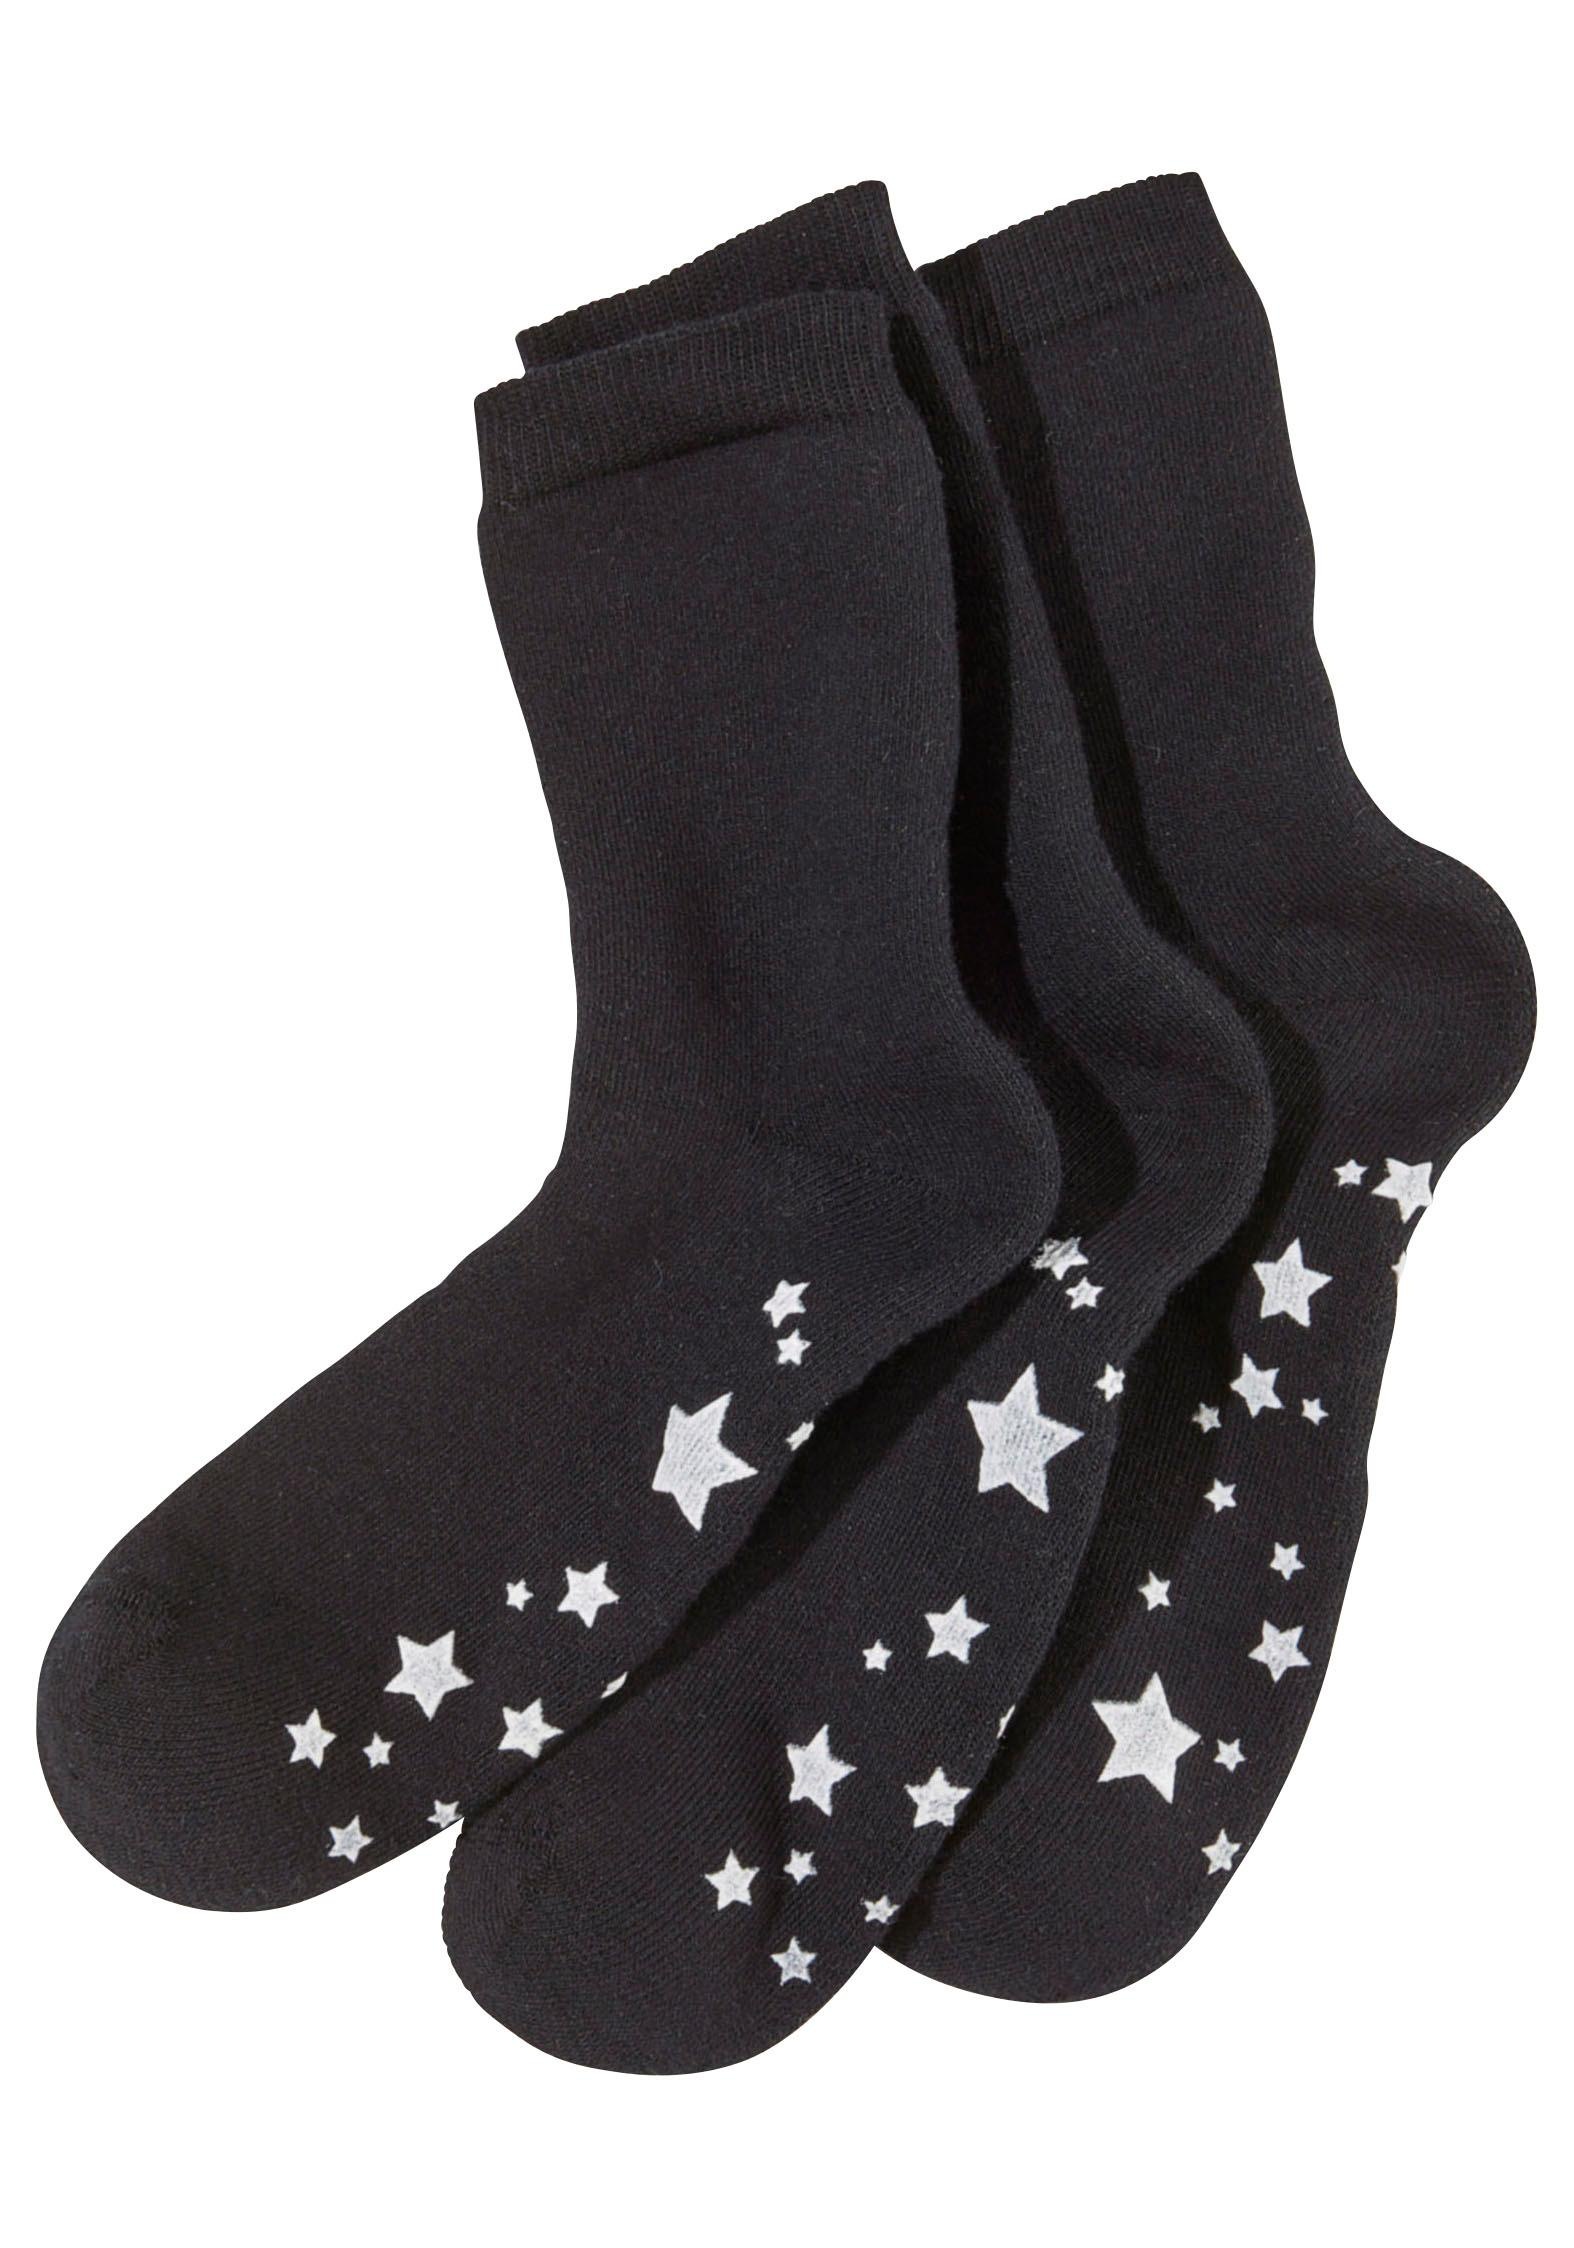 Image of Lavana ABS-Socken, (3 Paar), mit Antirutschsohle im Sterndesign